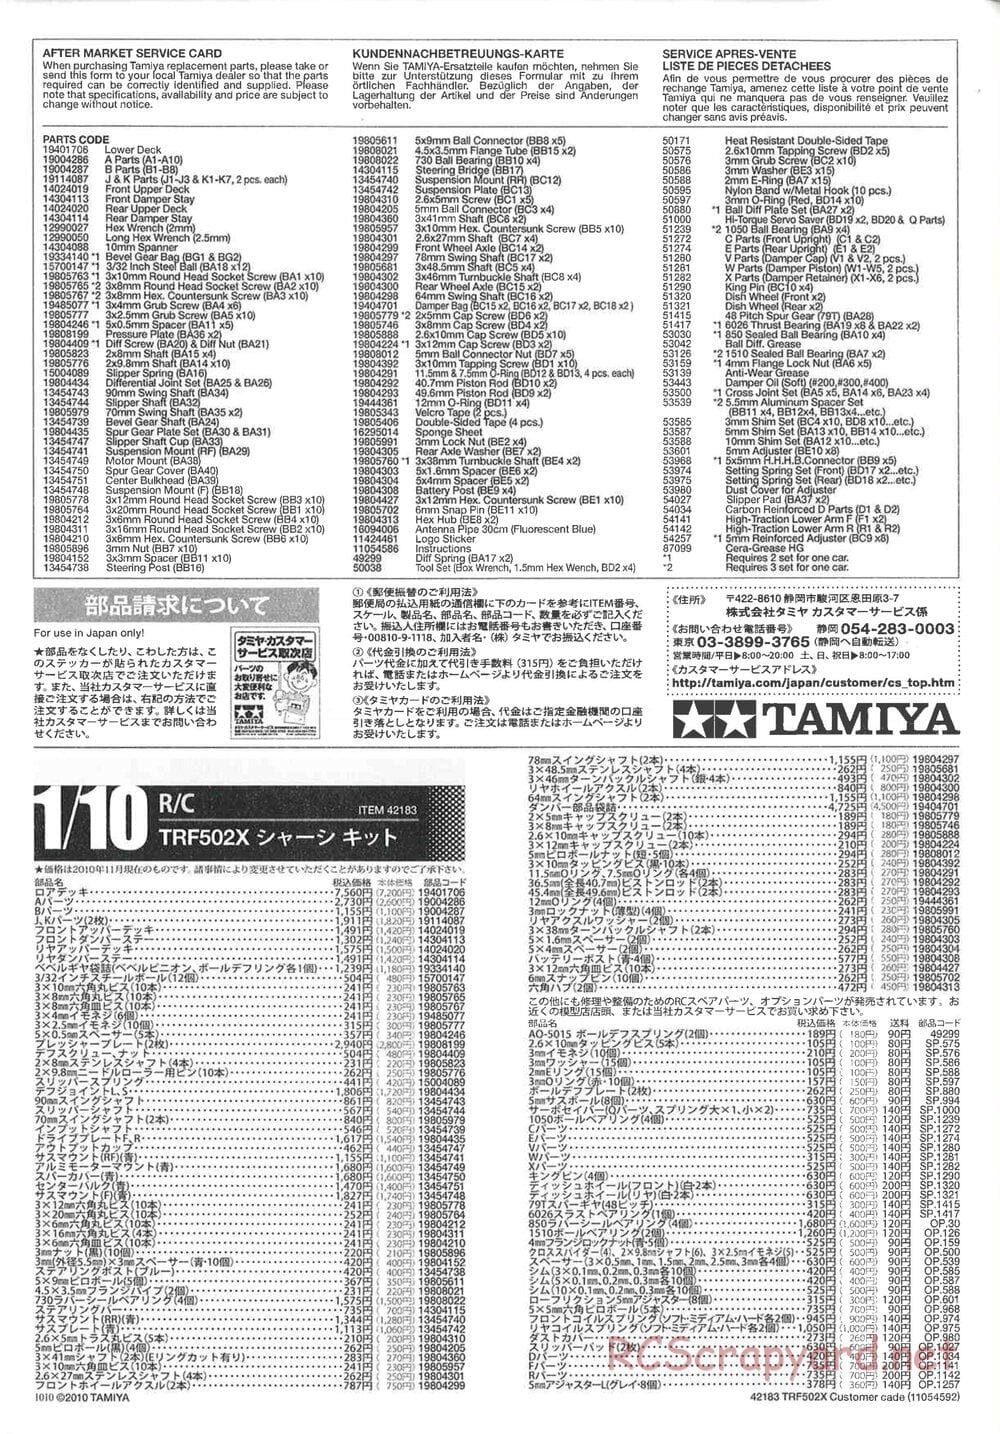 Tamiya - TRF502X Chassis - Manual - Page 33